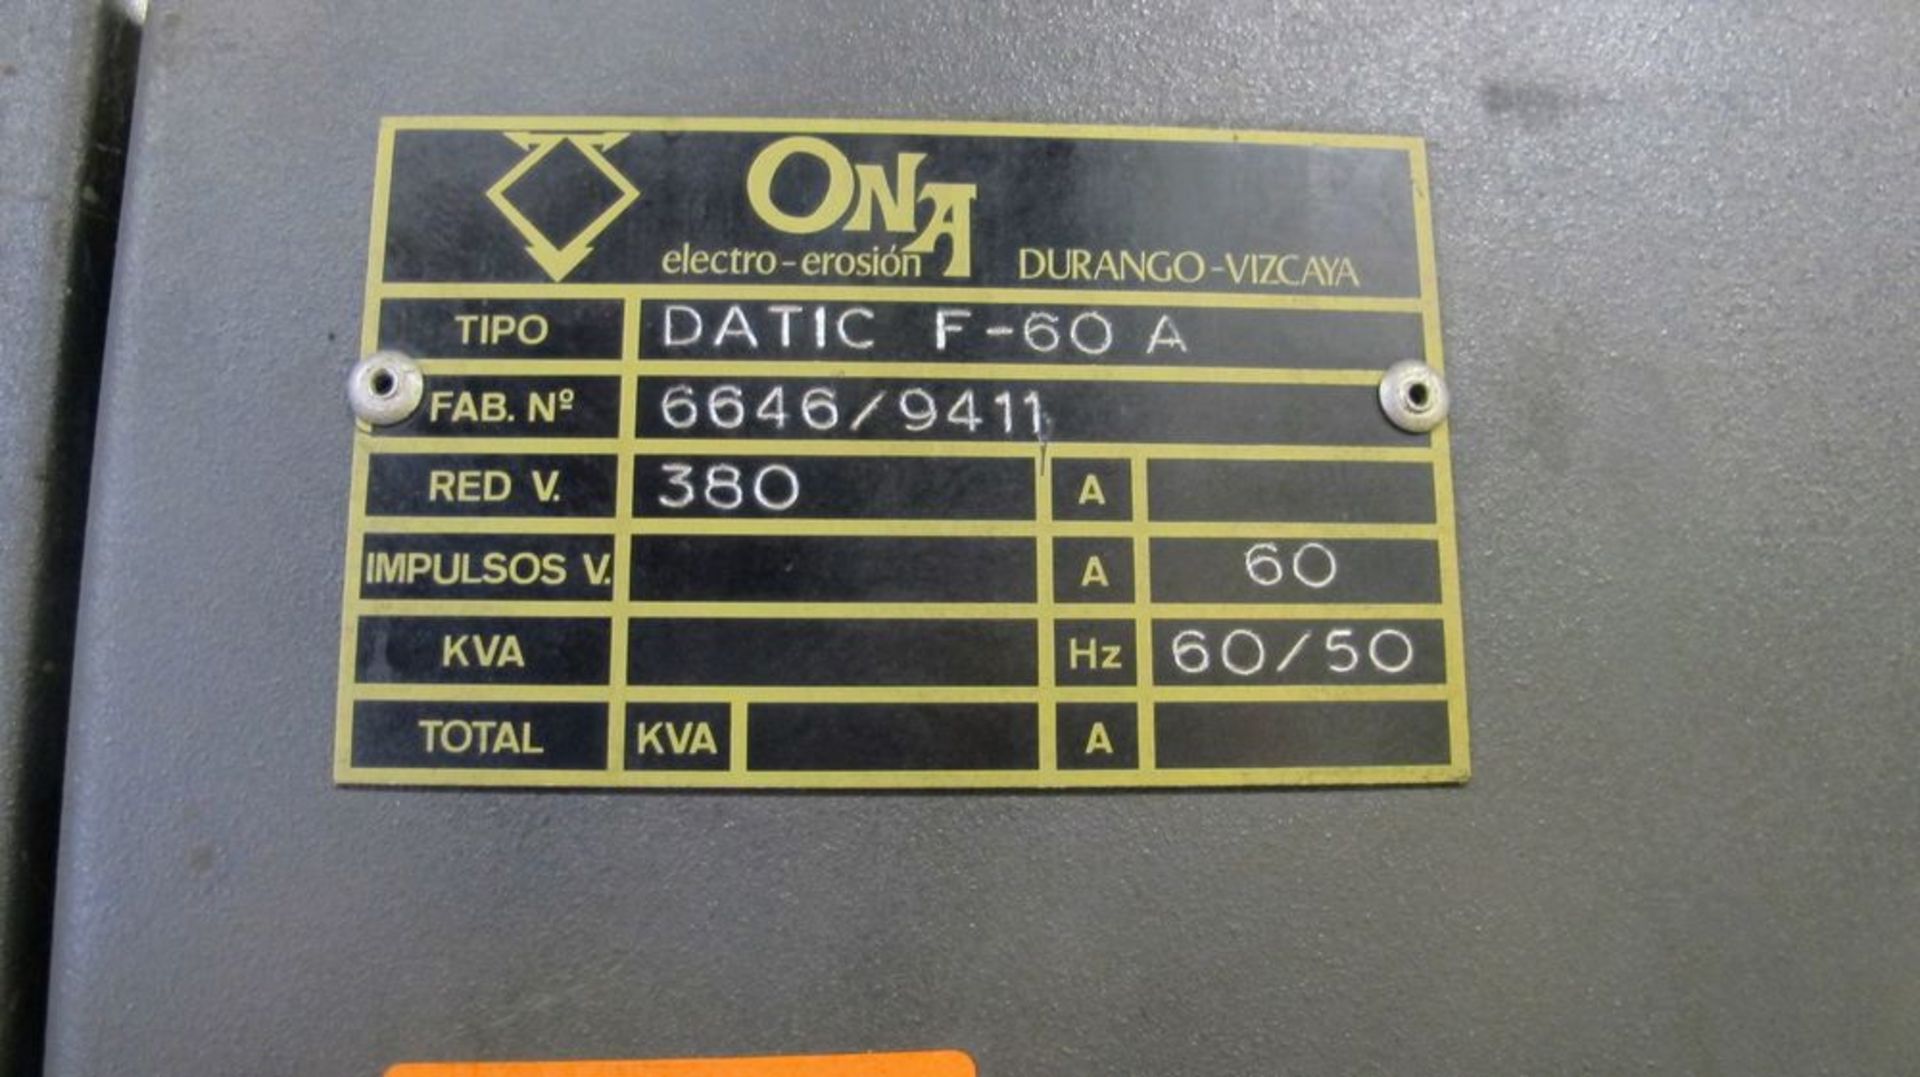 ONA Datic D-360-F Sinker EDM, Datic F60 Control, 16” x 24” Table, s/n 6646/9411 w/ Setup Clamps - Image 9 of 12